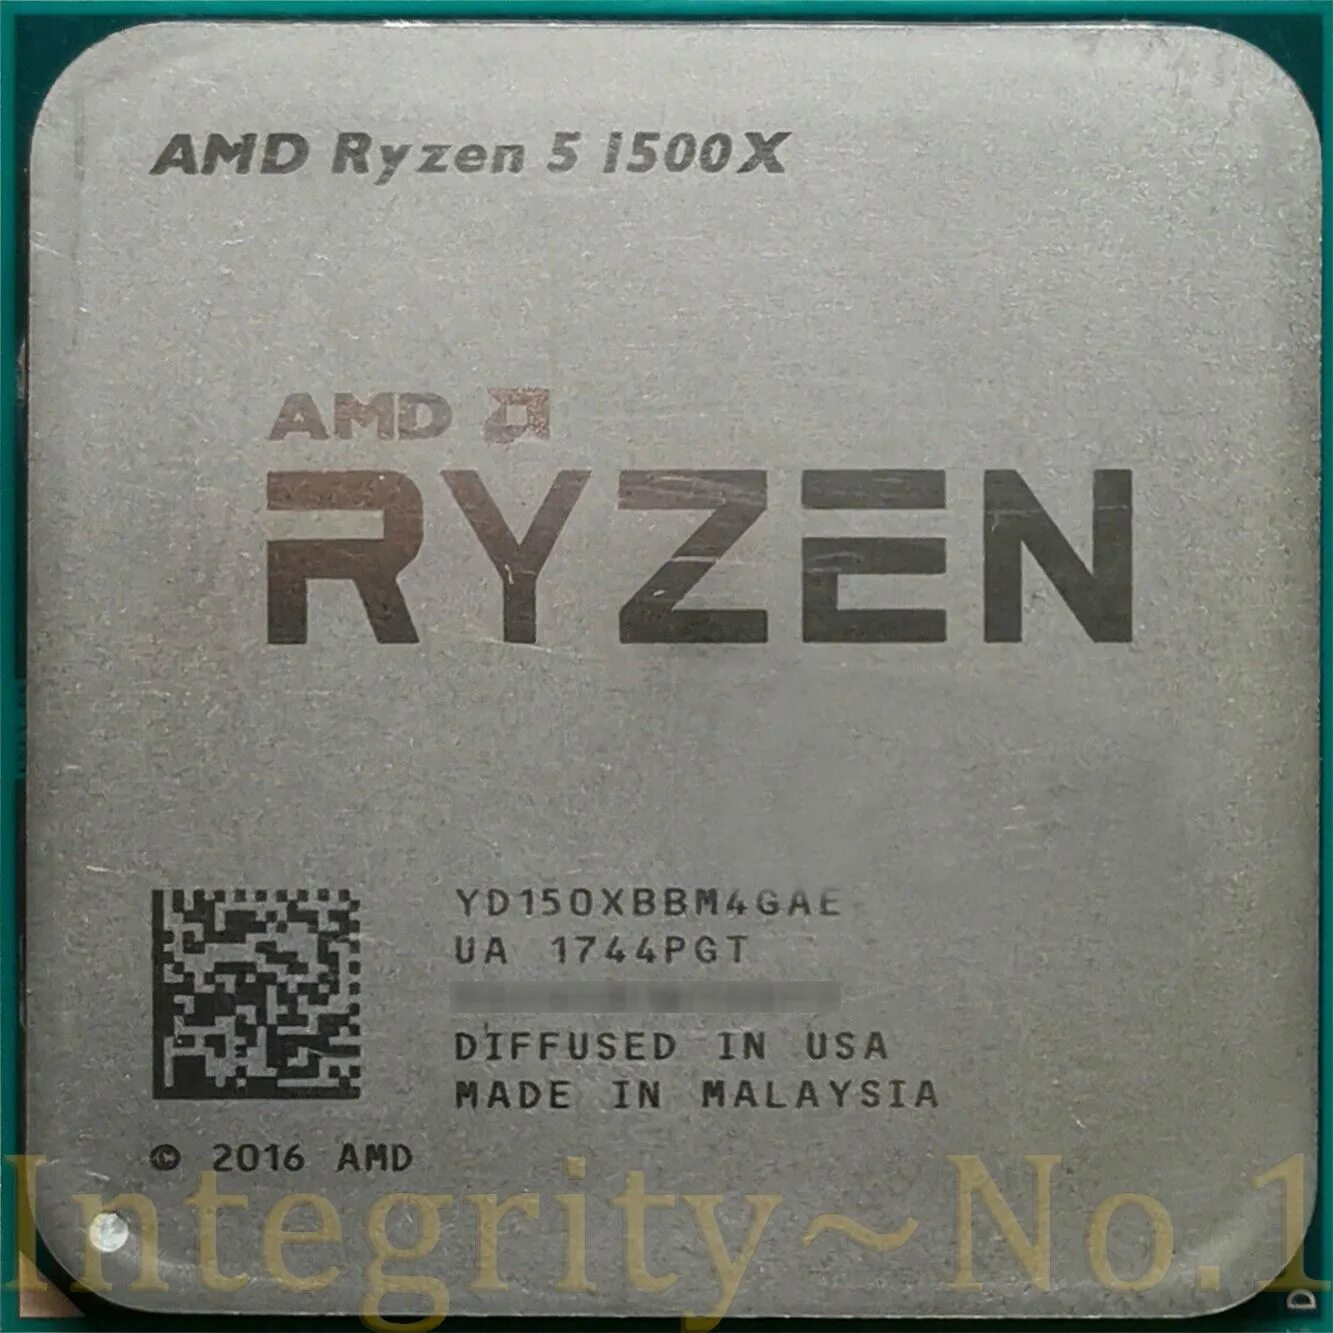 Ryzen 5 3400g. Ryzen 5 1500x. Процессор АМД райзен 5. Ryzen 5 1500x купить. 5 3400g купить